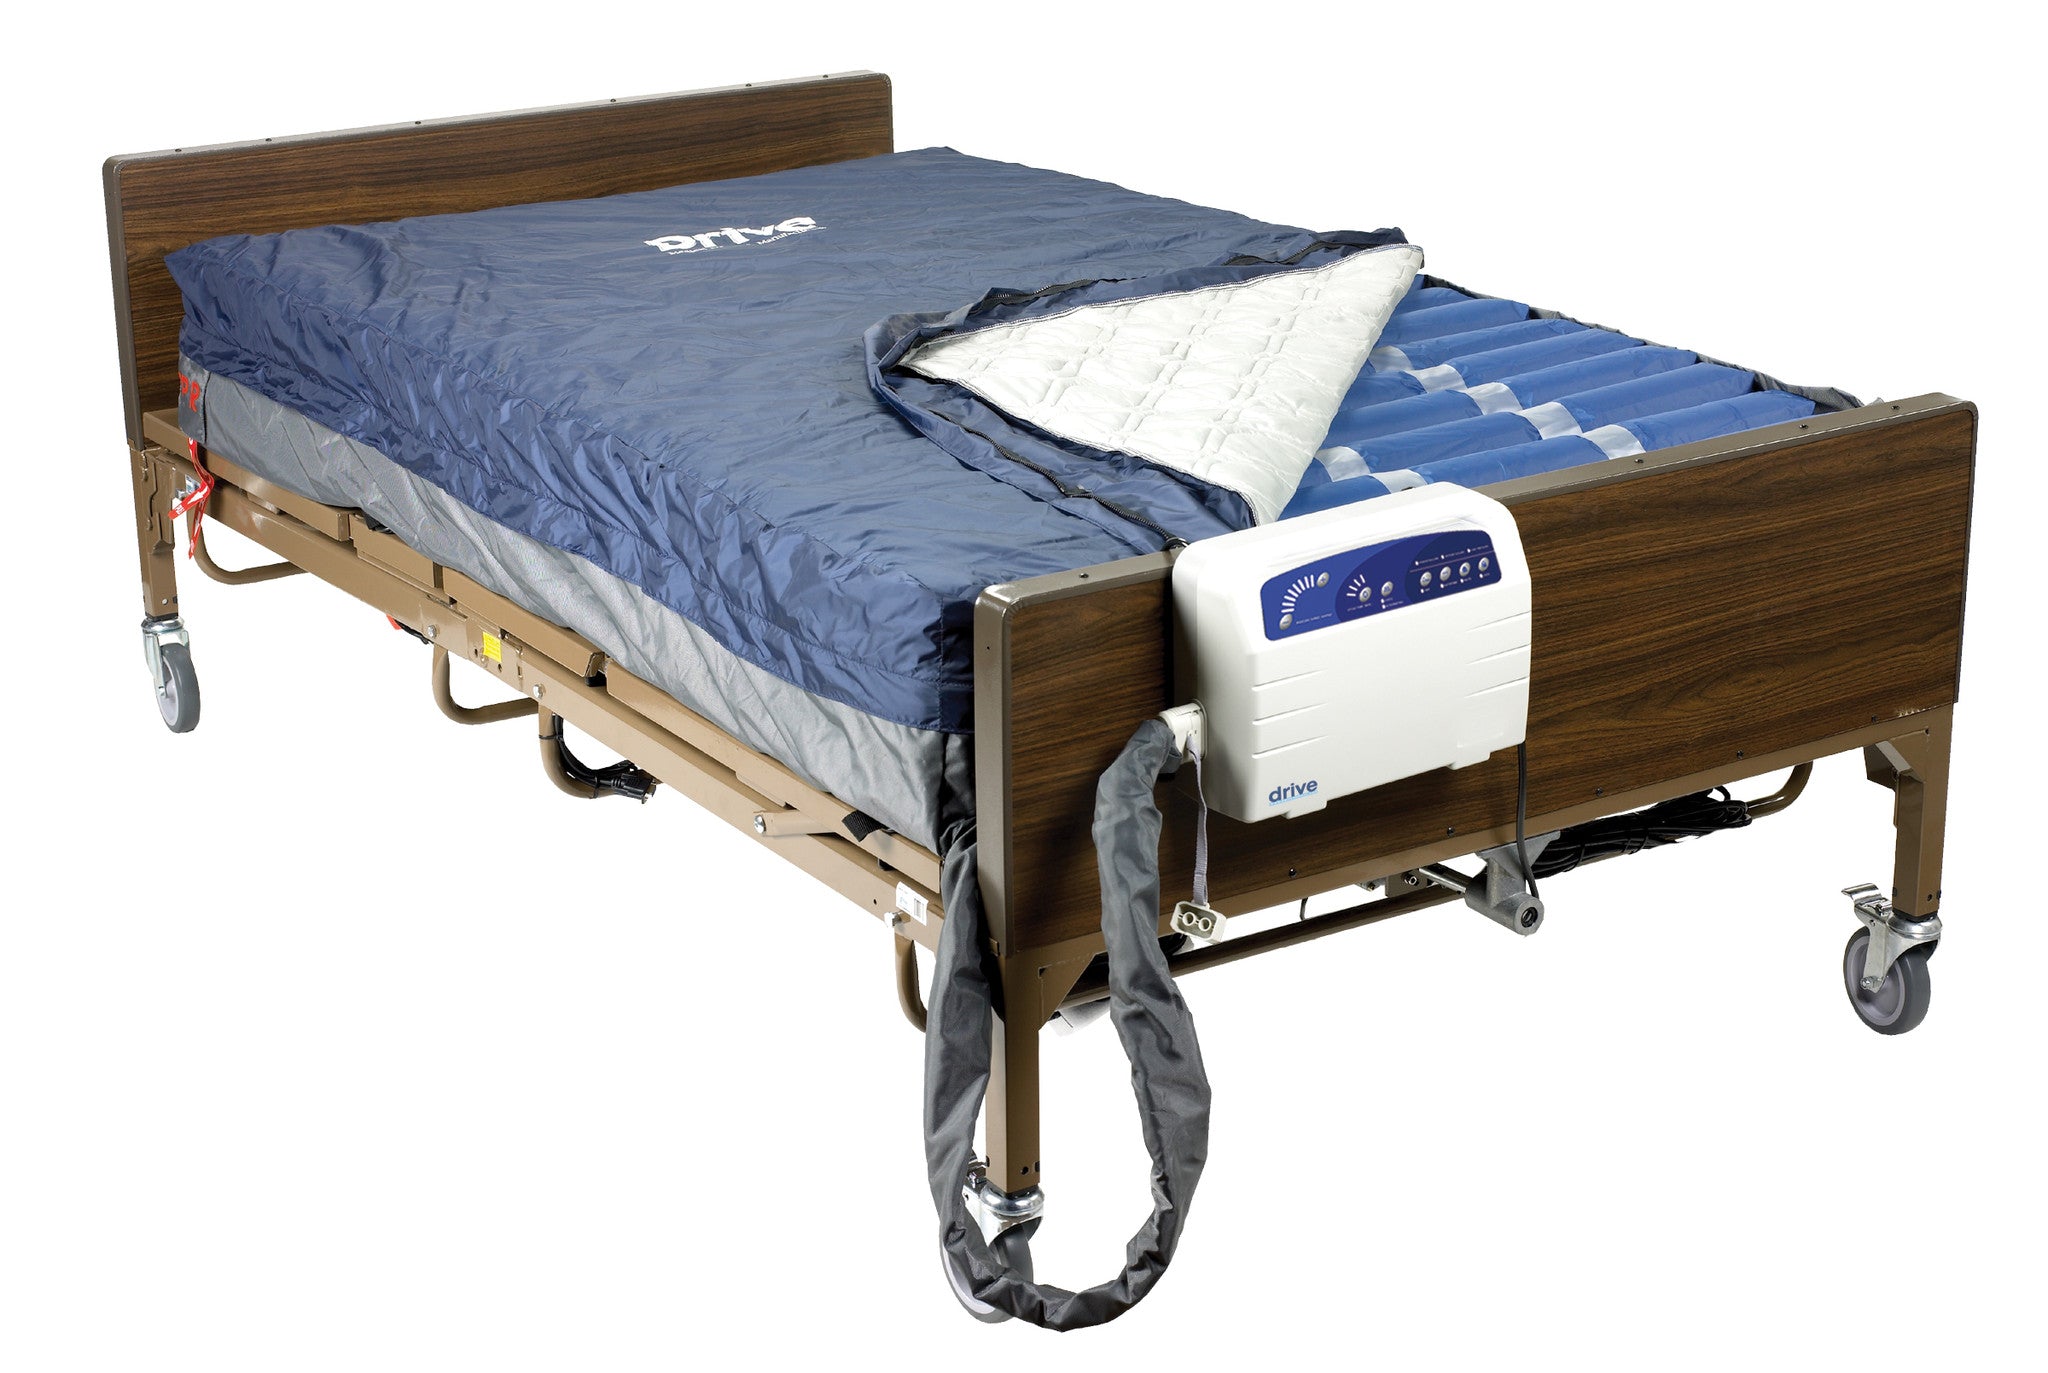 static on low air loss mattress